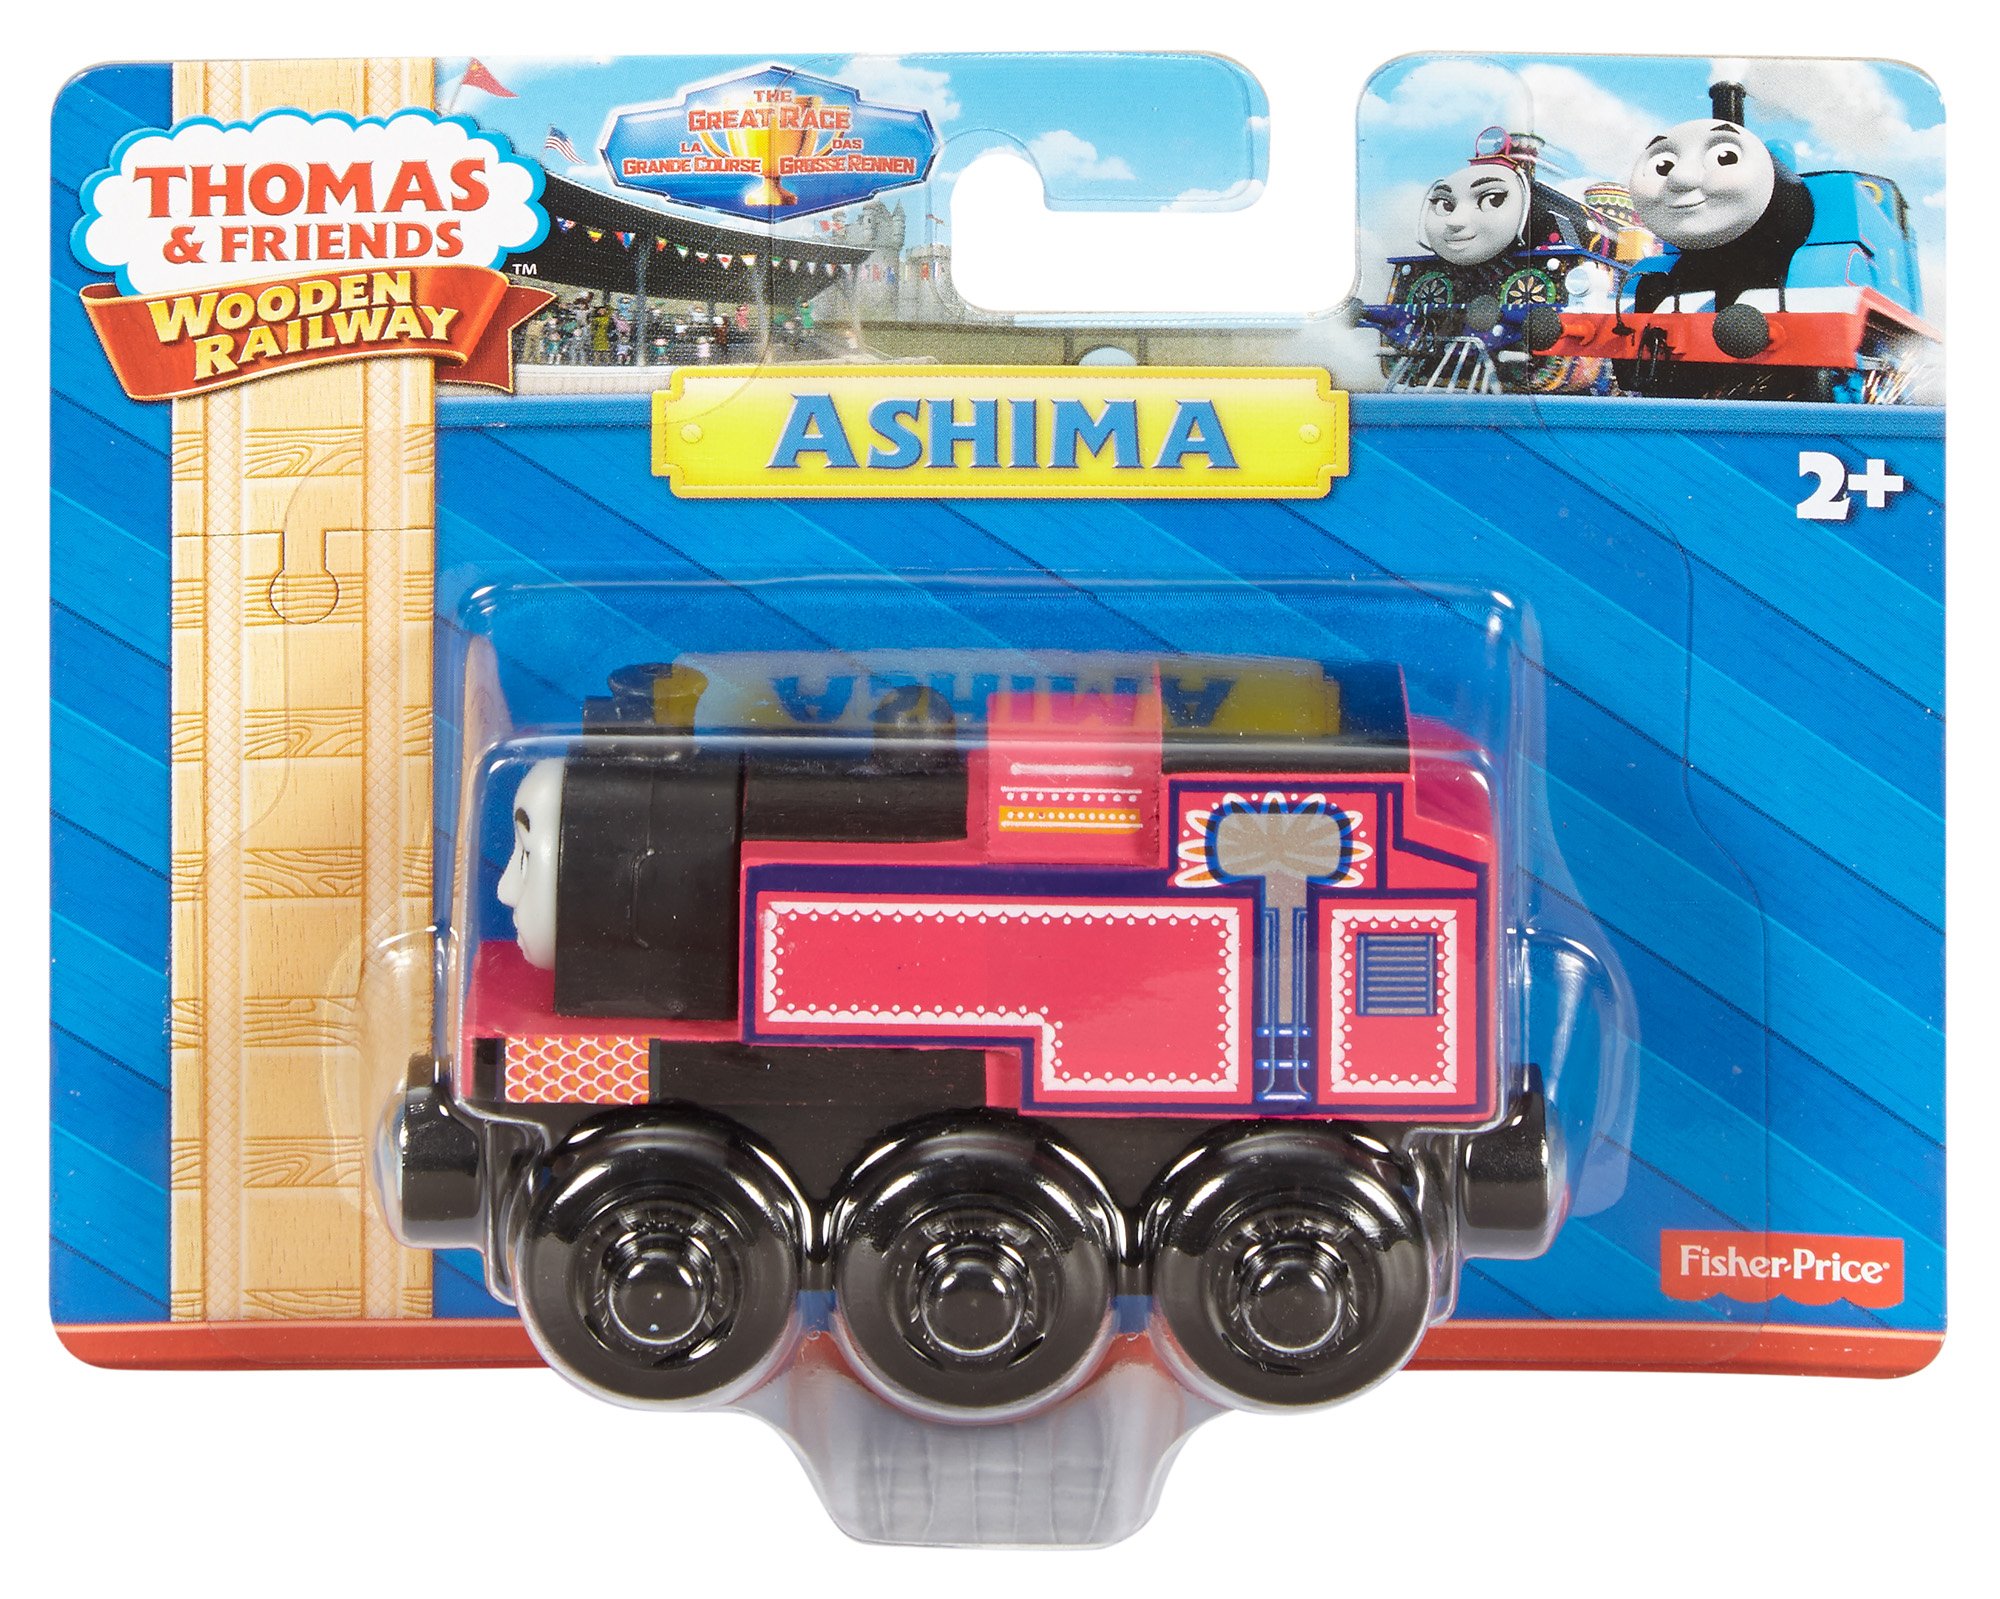 Thomas & Friends Wooden Railway, Ashima